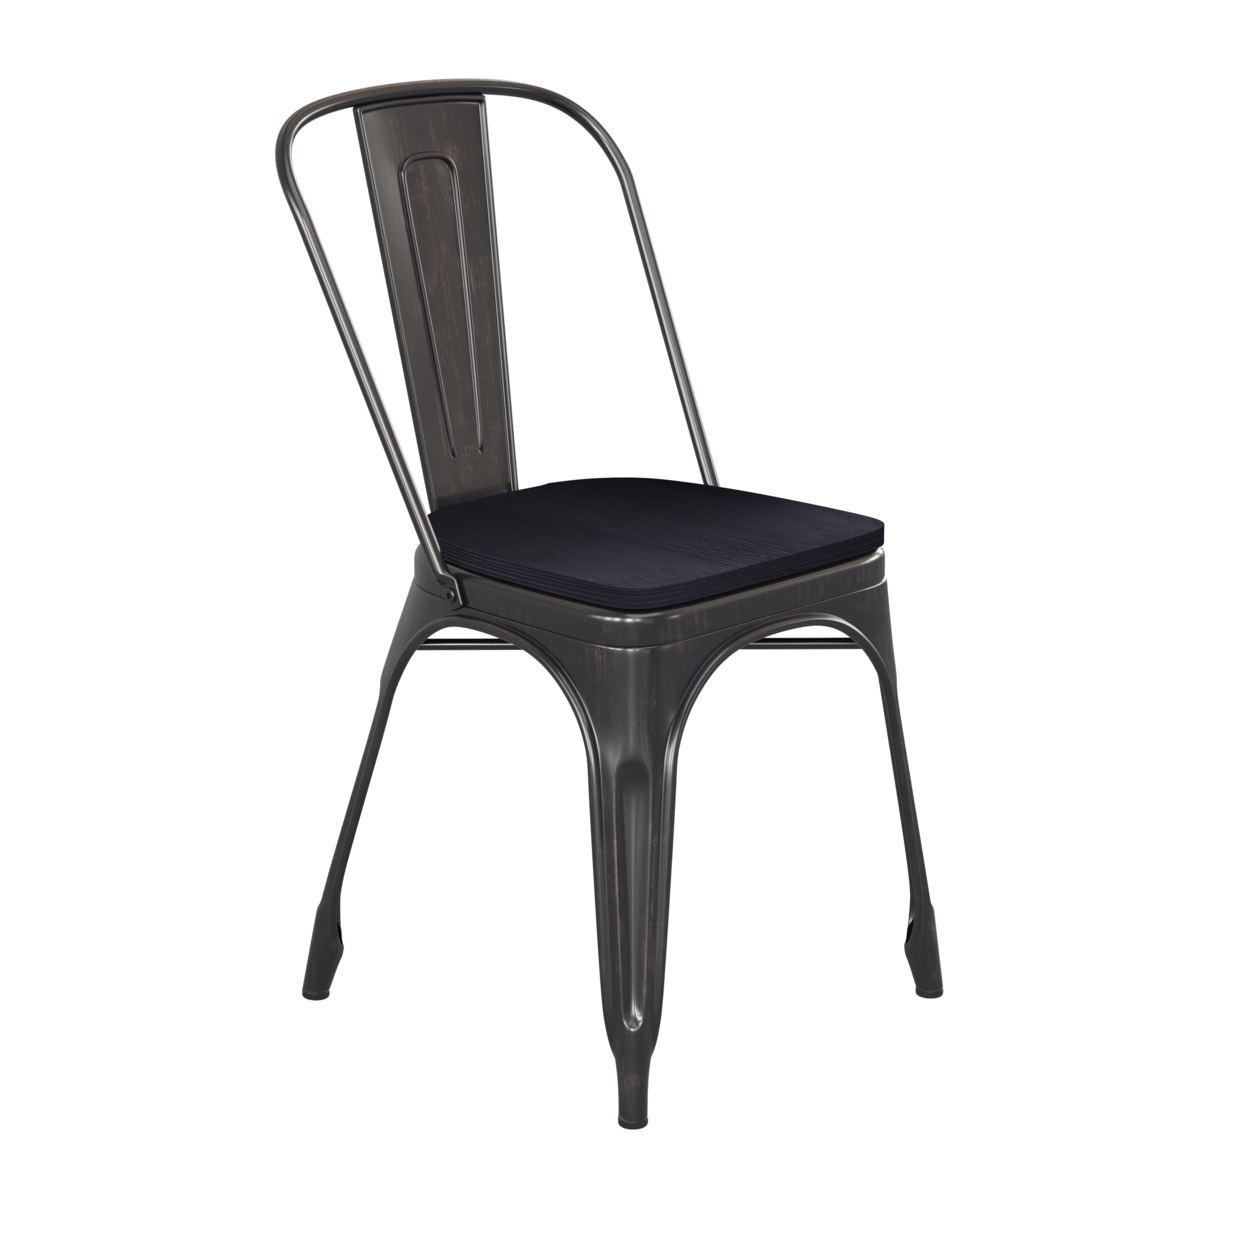 Metal Chair, Curved Design Back, Polyresin Wood Seat, Black